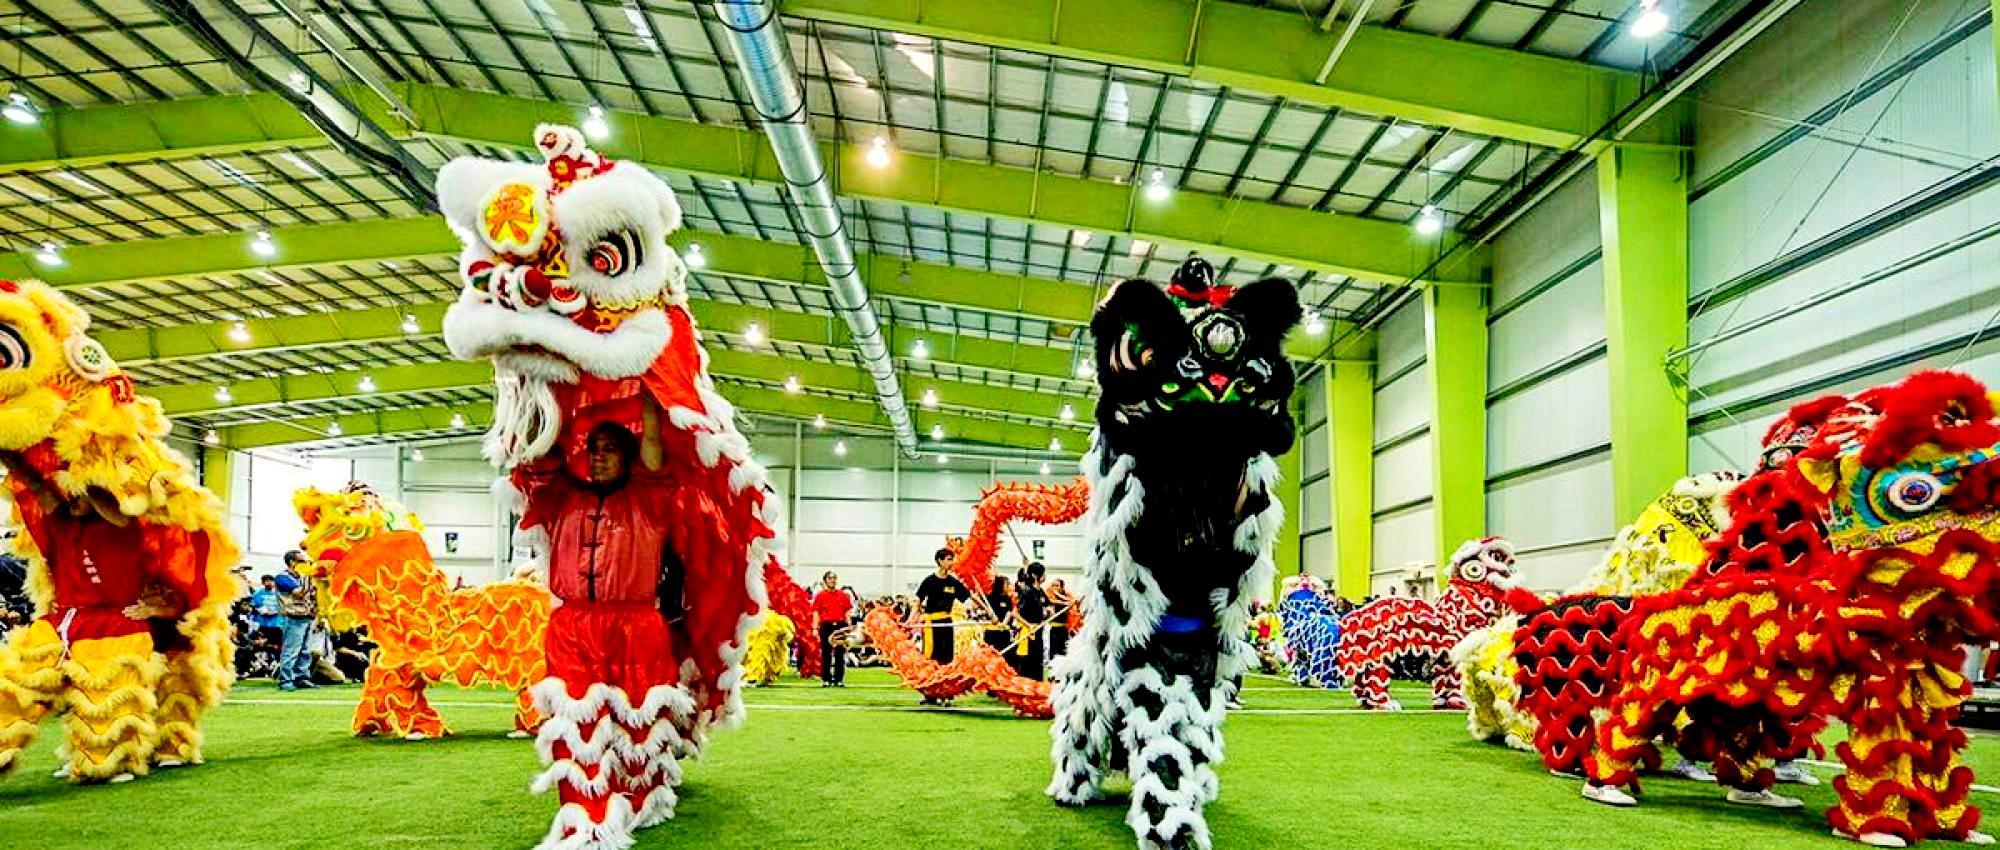 
 Google image from https://culture.mississauga.ca/event/celebration-square/dragon-lion-dance-festival